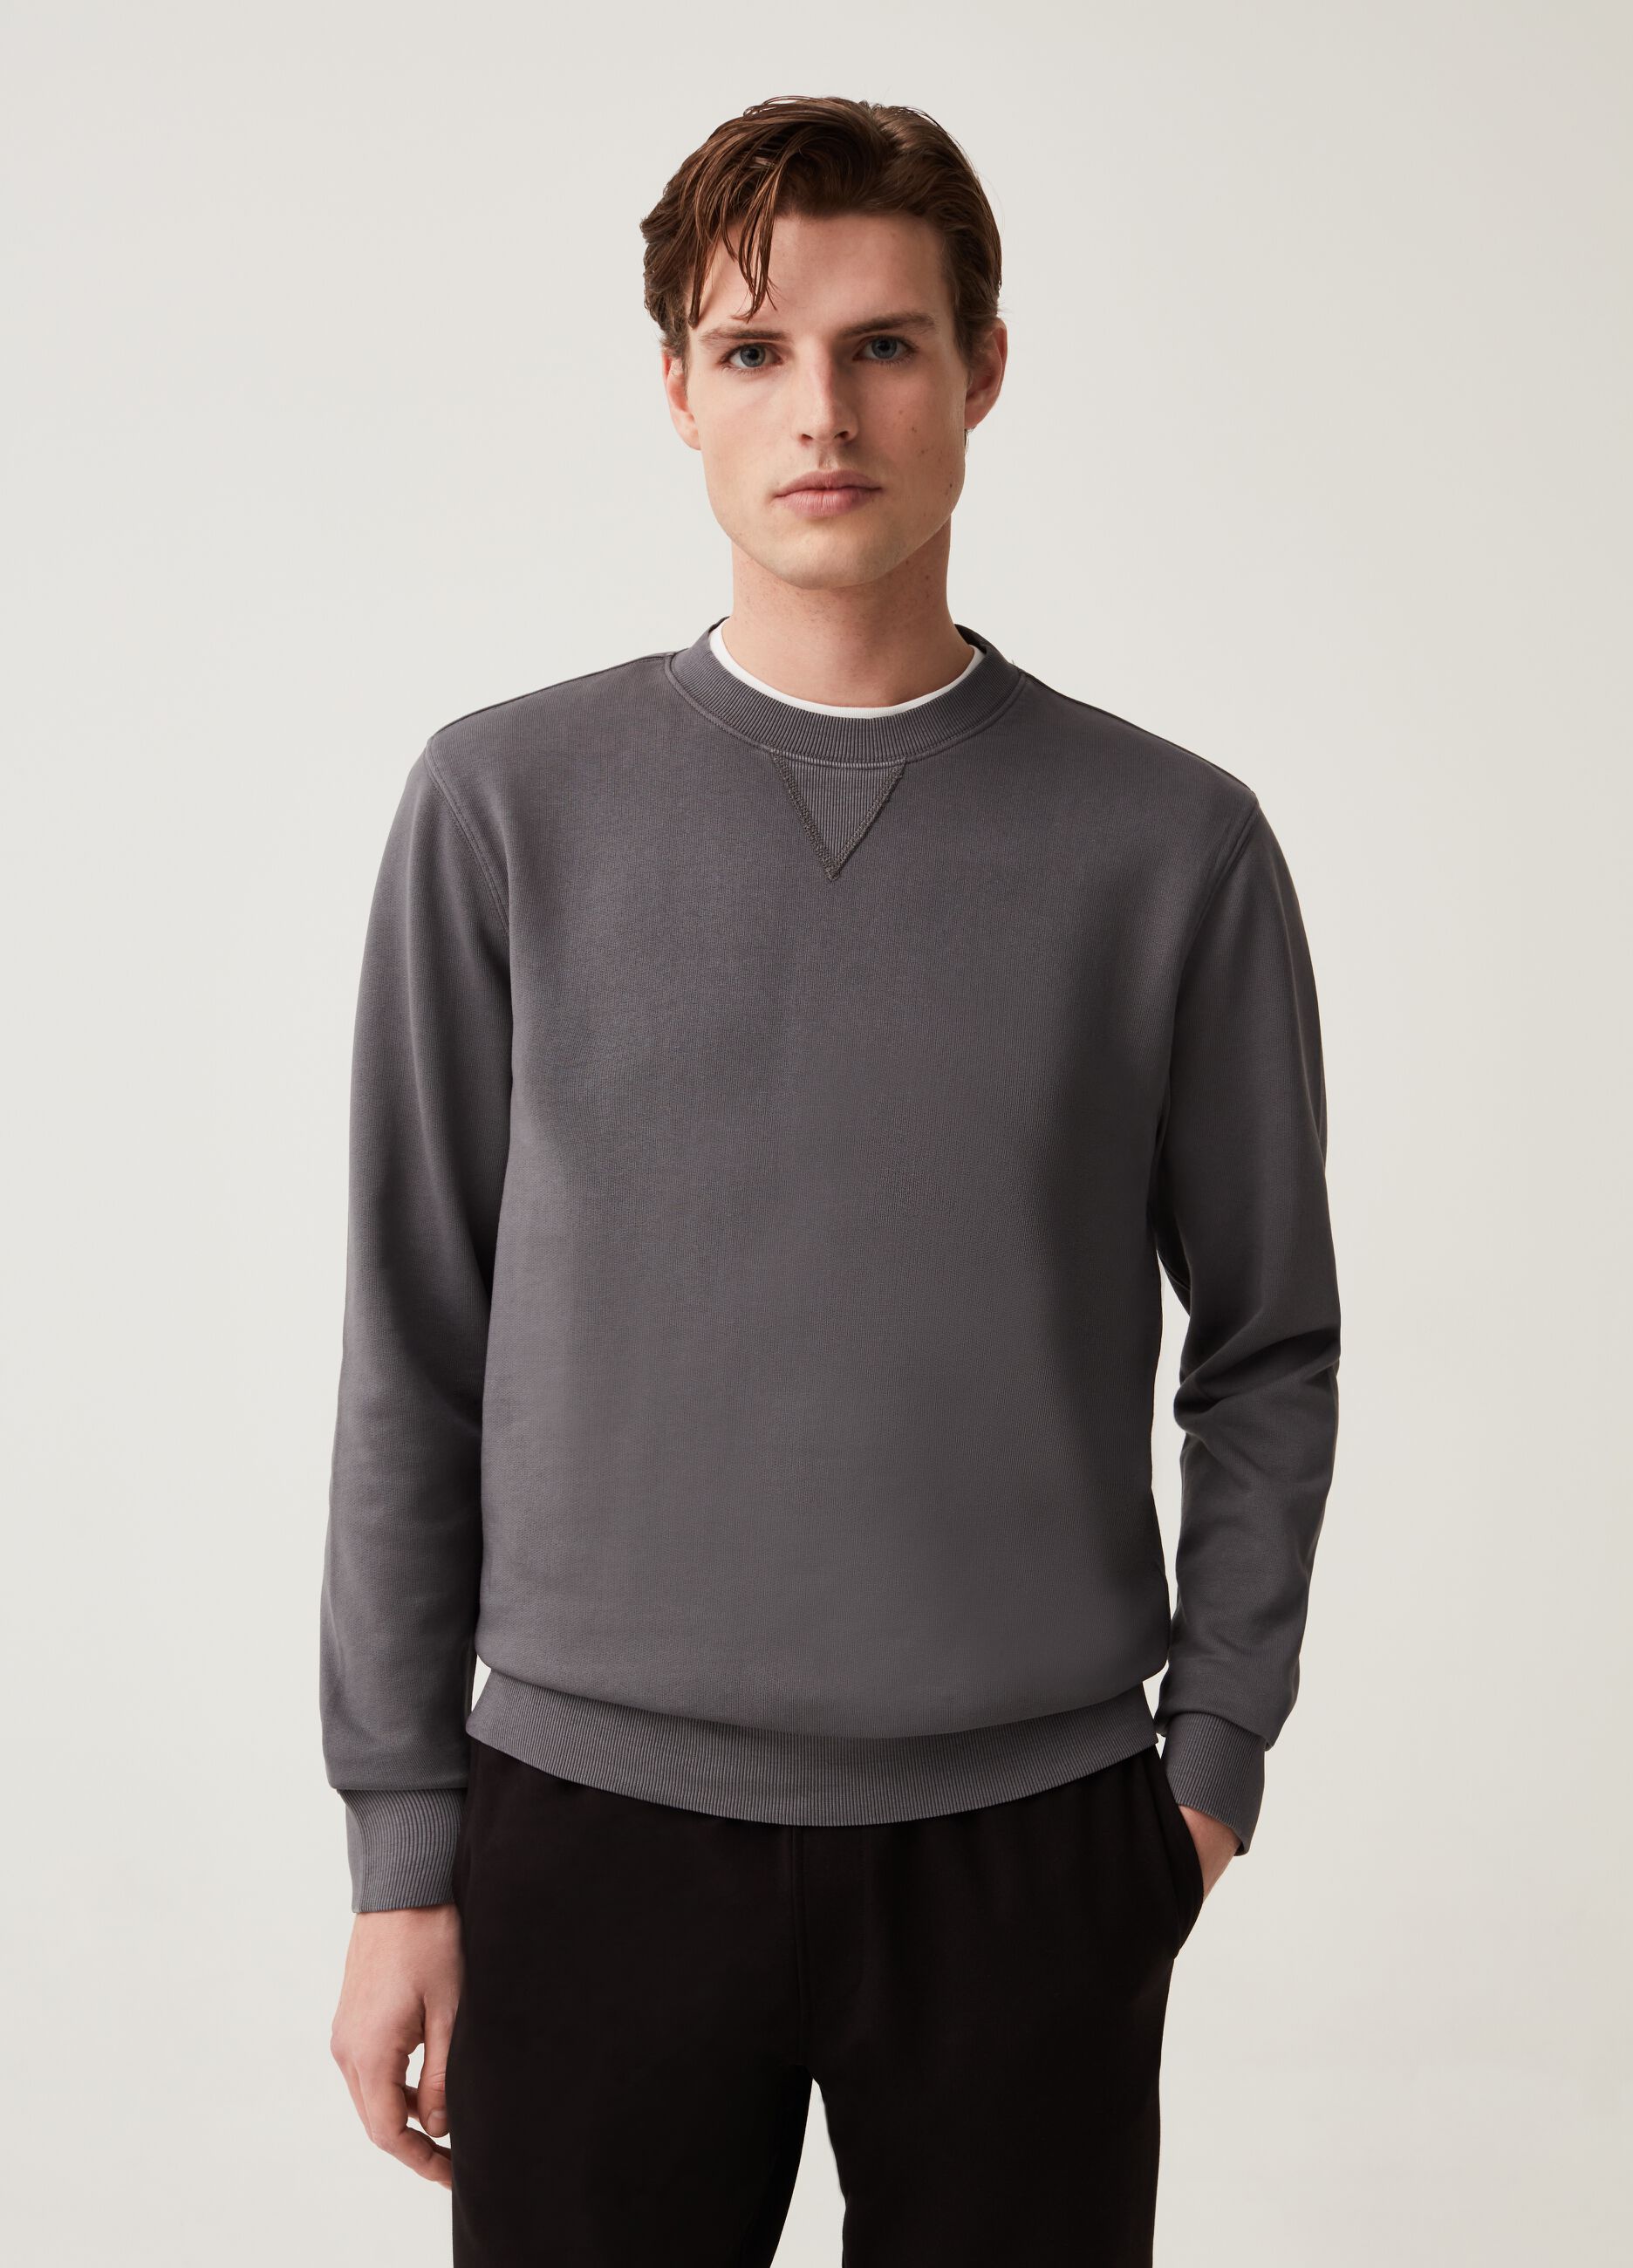 Grand & Hills sweatshirt with V detail